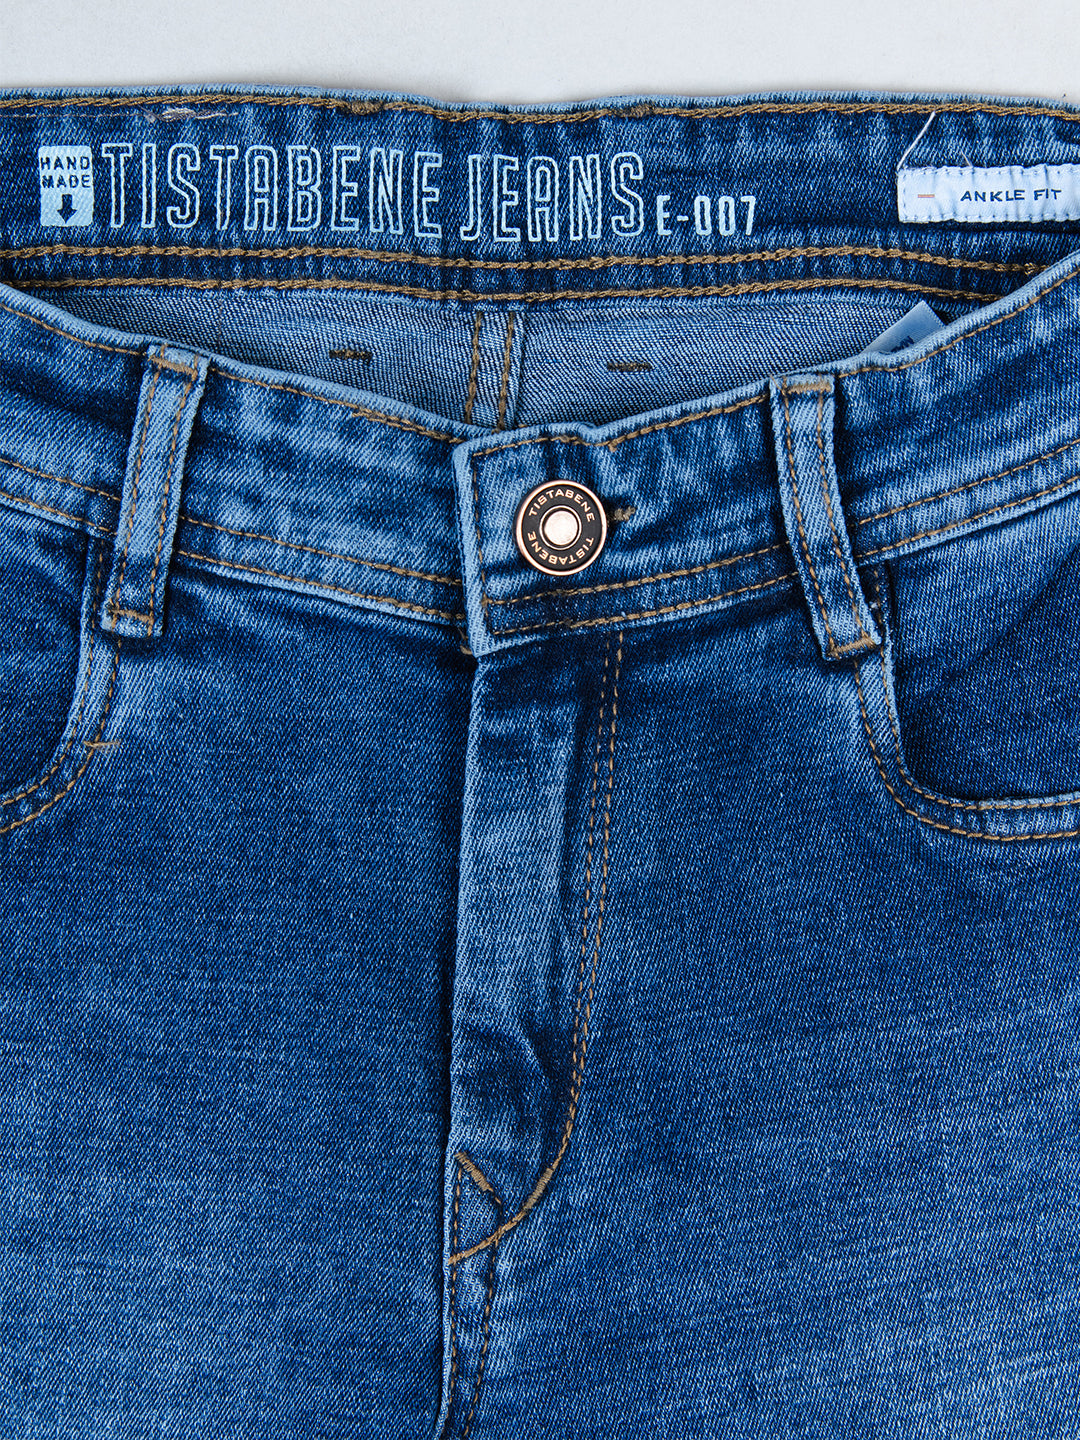 blue denim jeans